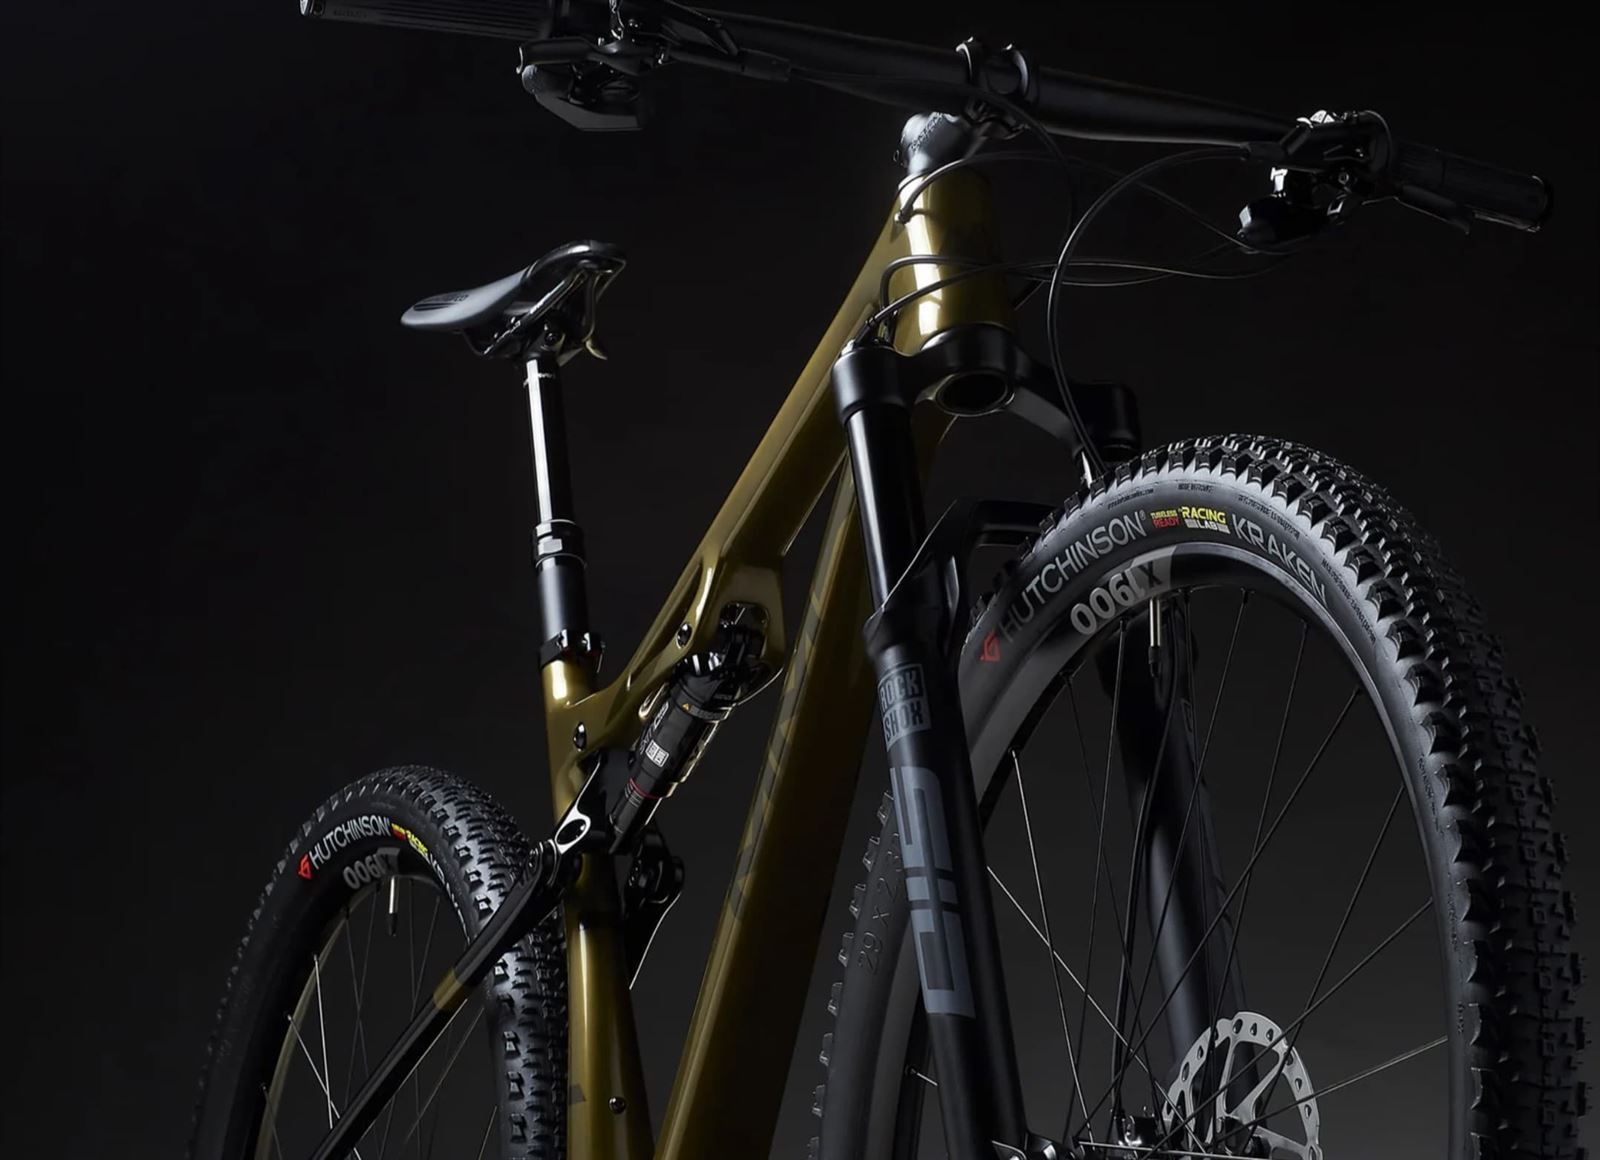 Bicicleta MTB 29¨ MMR KENTA SXC, dorado oscuro - Imagen 2